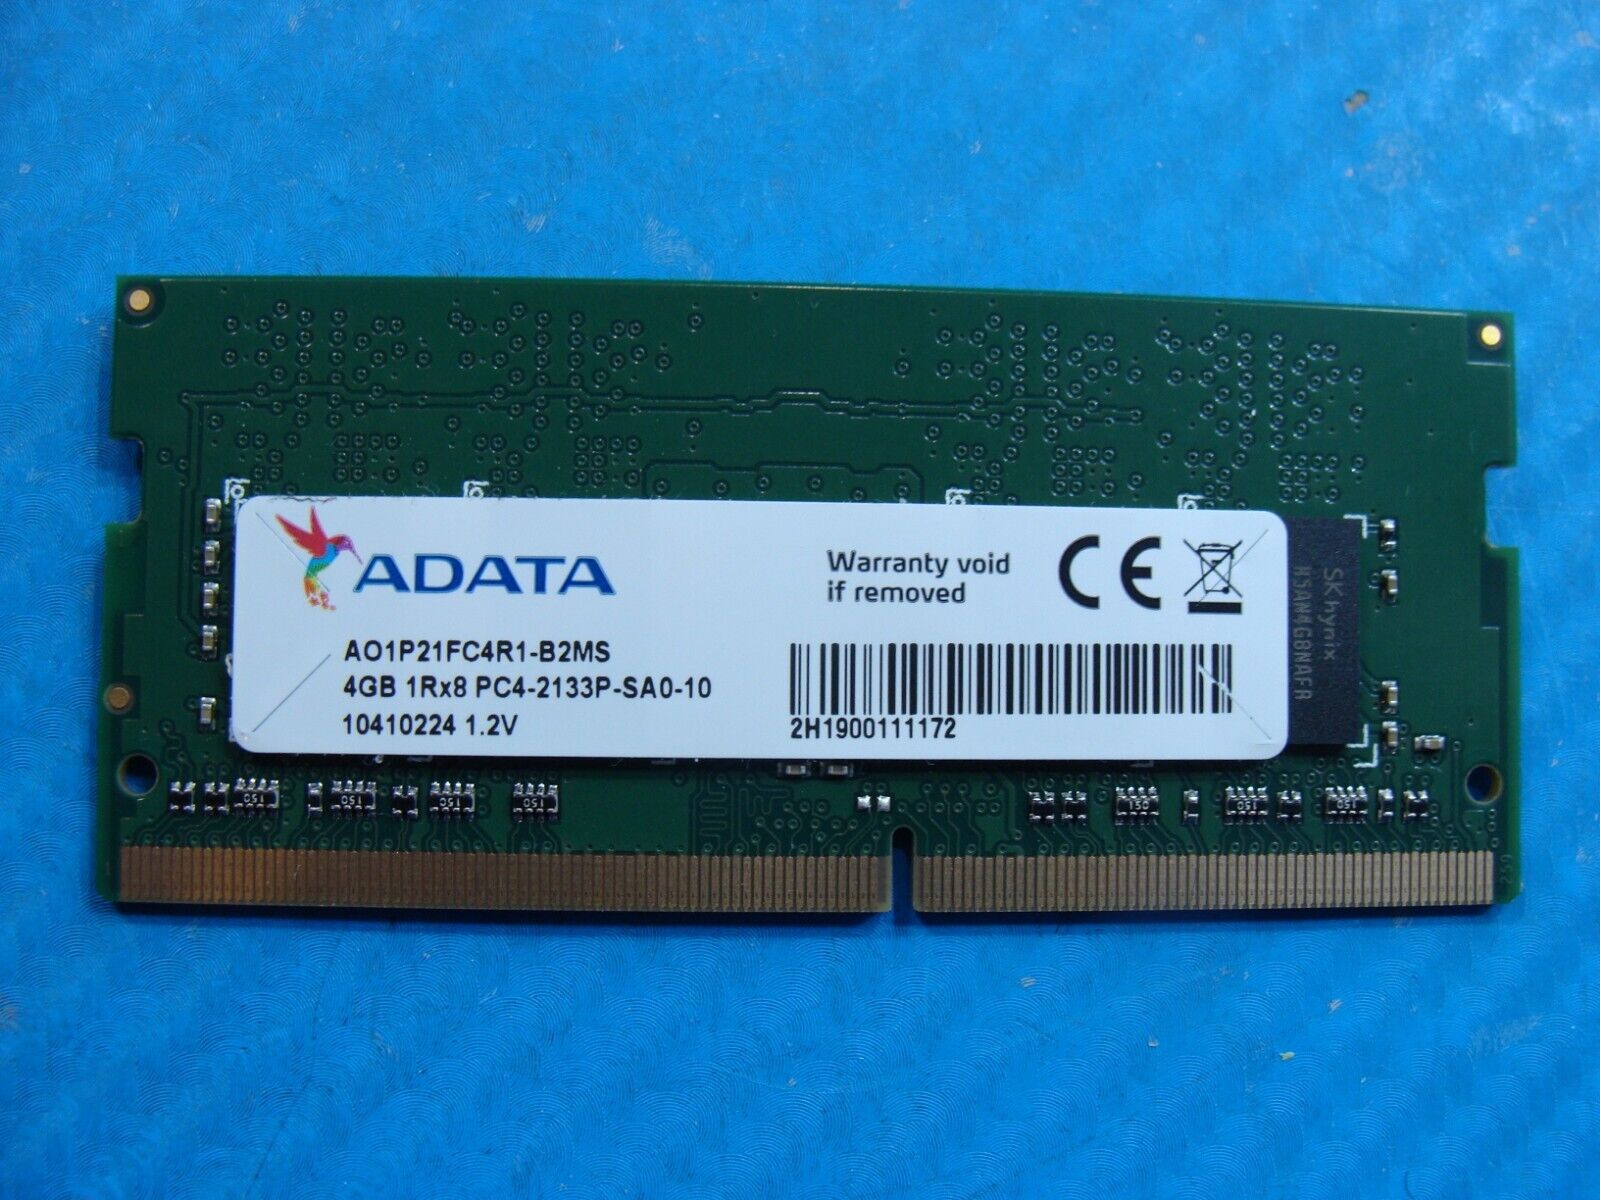 Acer A515-51-3509 So-Dimm ADATA 4GB 1Rx8 Memory RAM PC4-2133P AO1P21FC4R1-B2MS